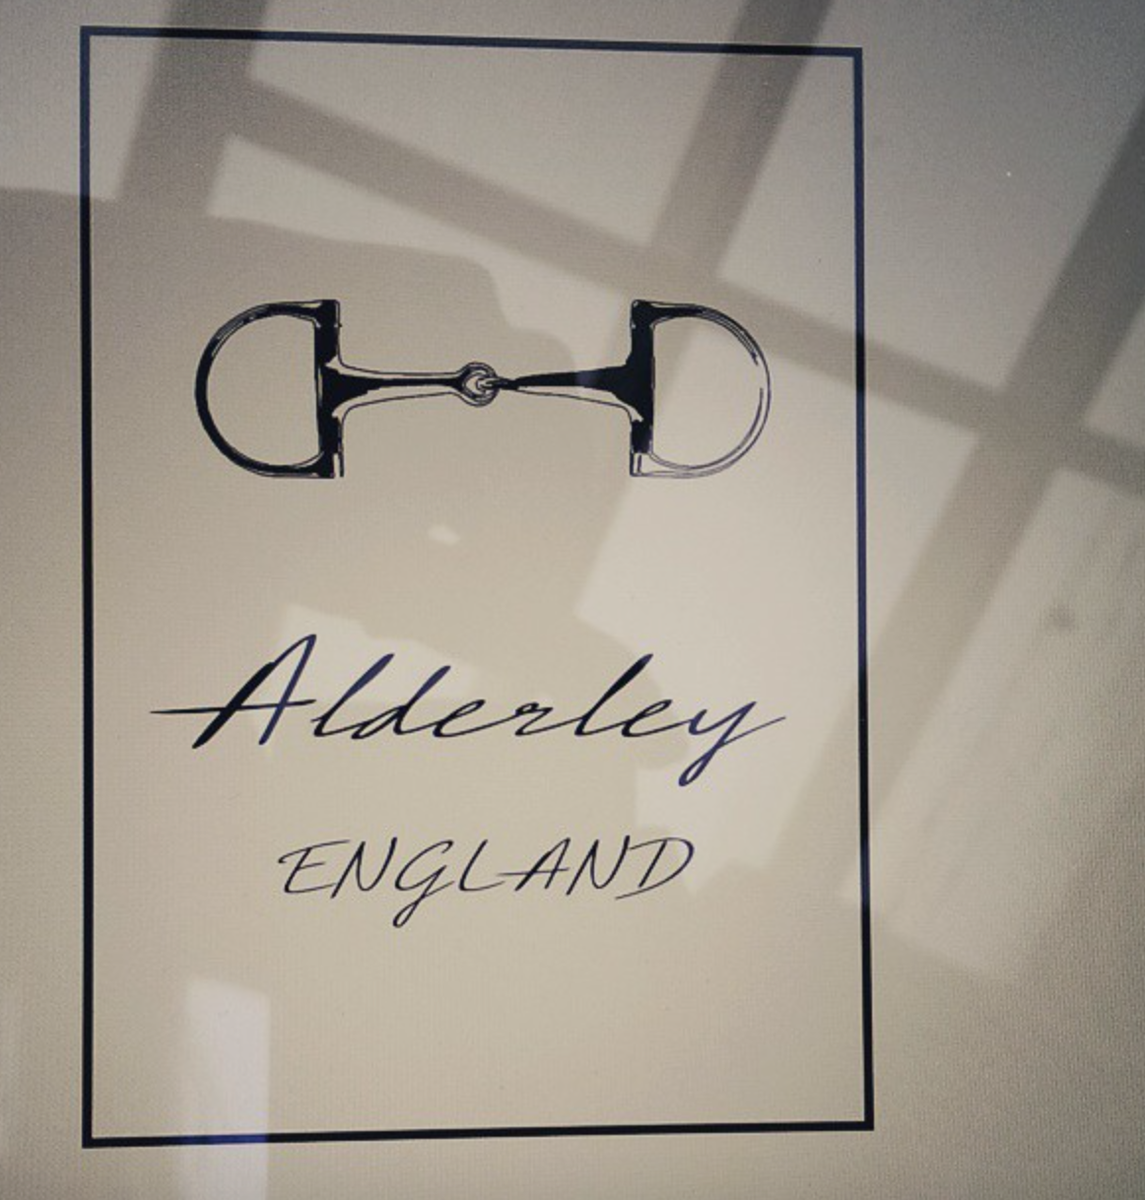 #Equestrianbrand #design #Alderley #Branding finally decided!